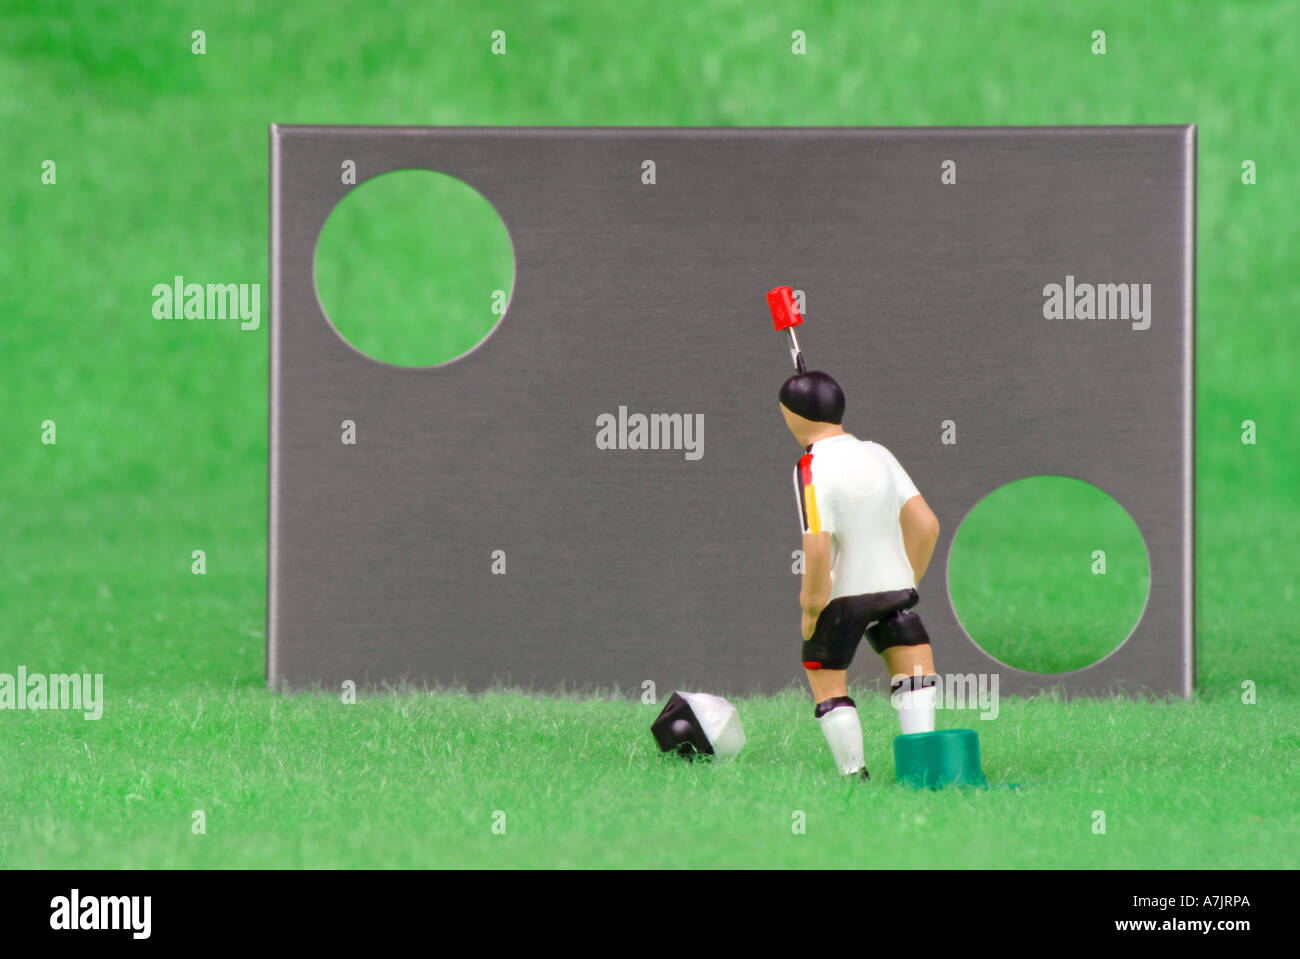 Juego de pelota de fútbol jugador pared Torwand objetivo disparar bolas mit und Spieler Foto de stock